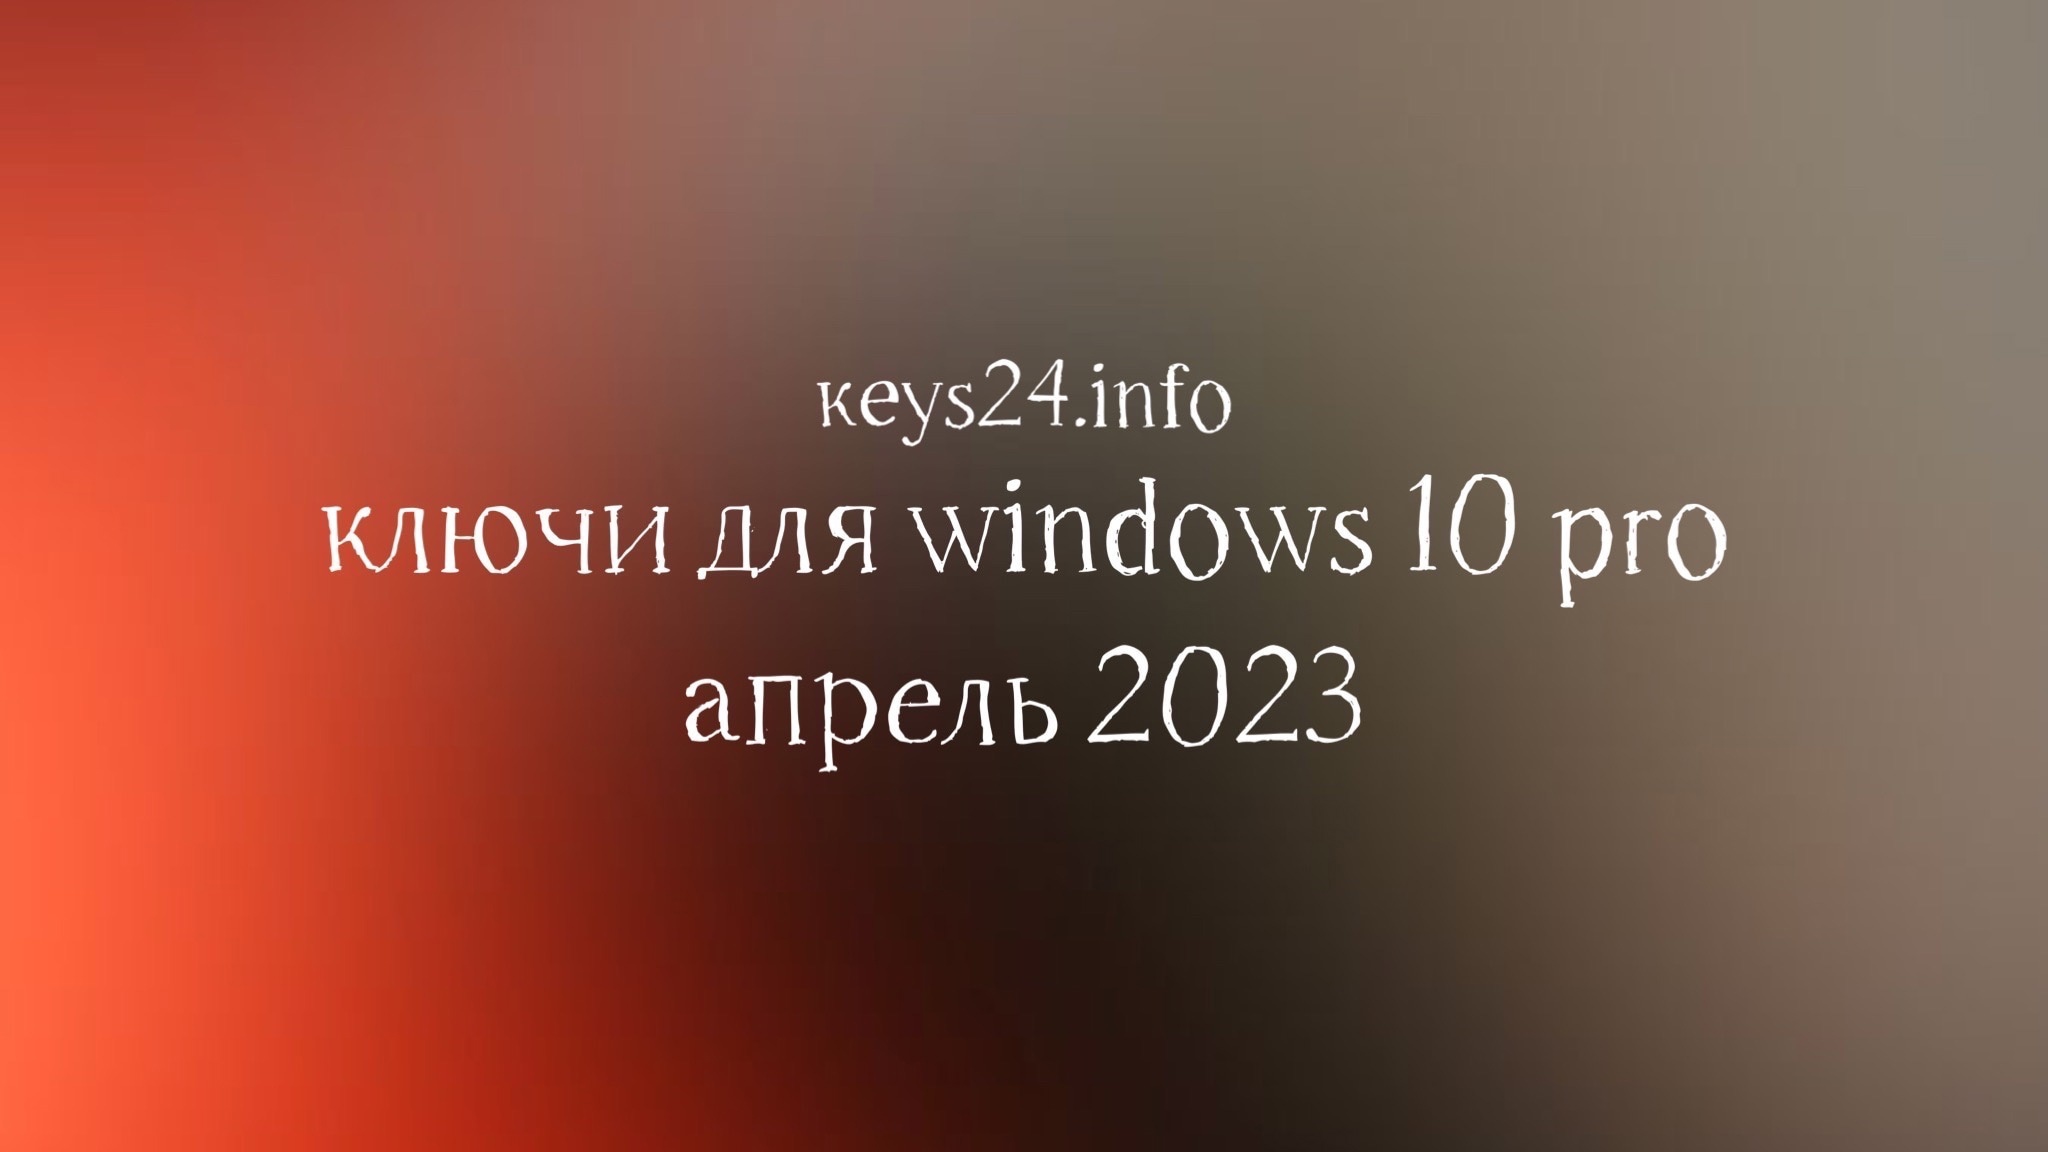 keys for windows 10 pro april 2023